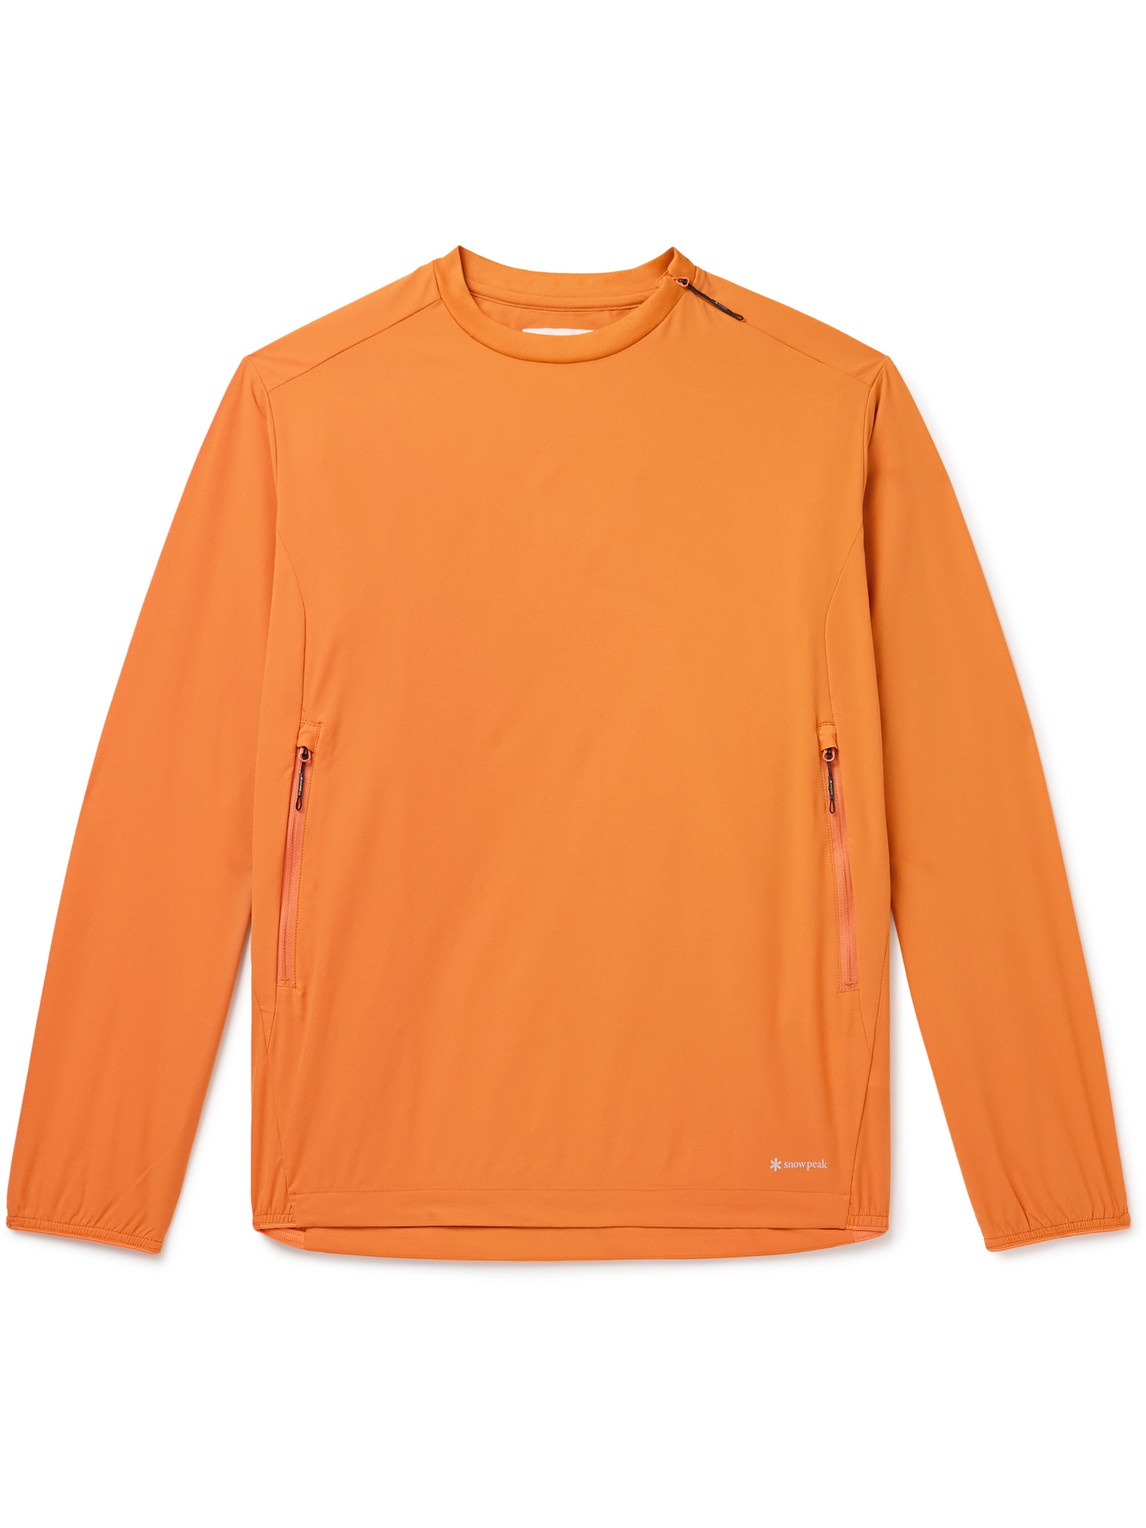 Snow Peak Ripstop Sweatshirt In Orange